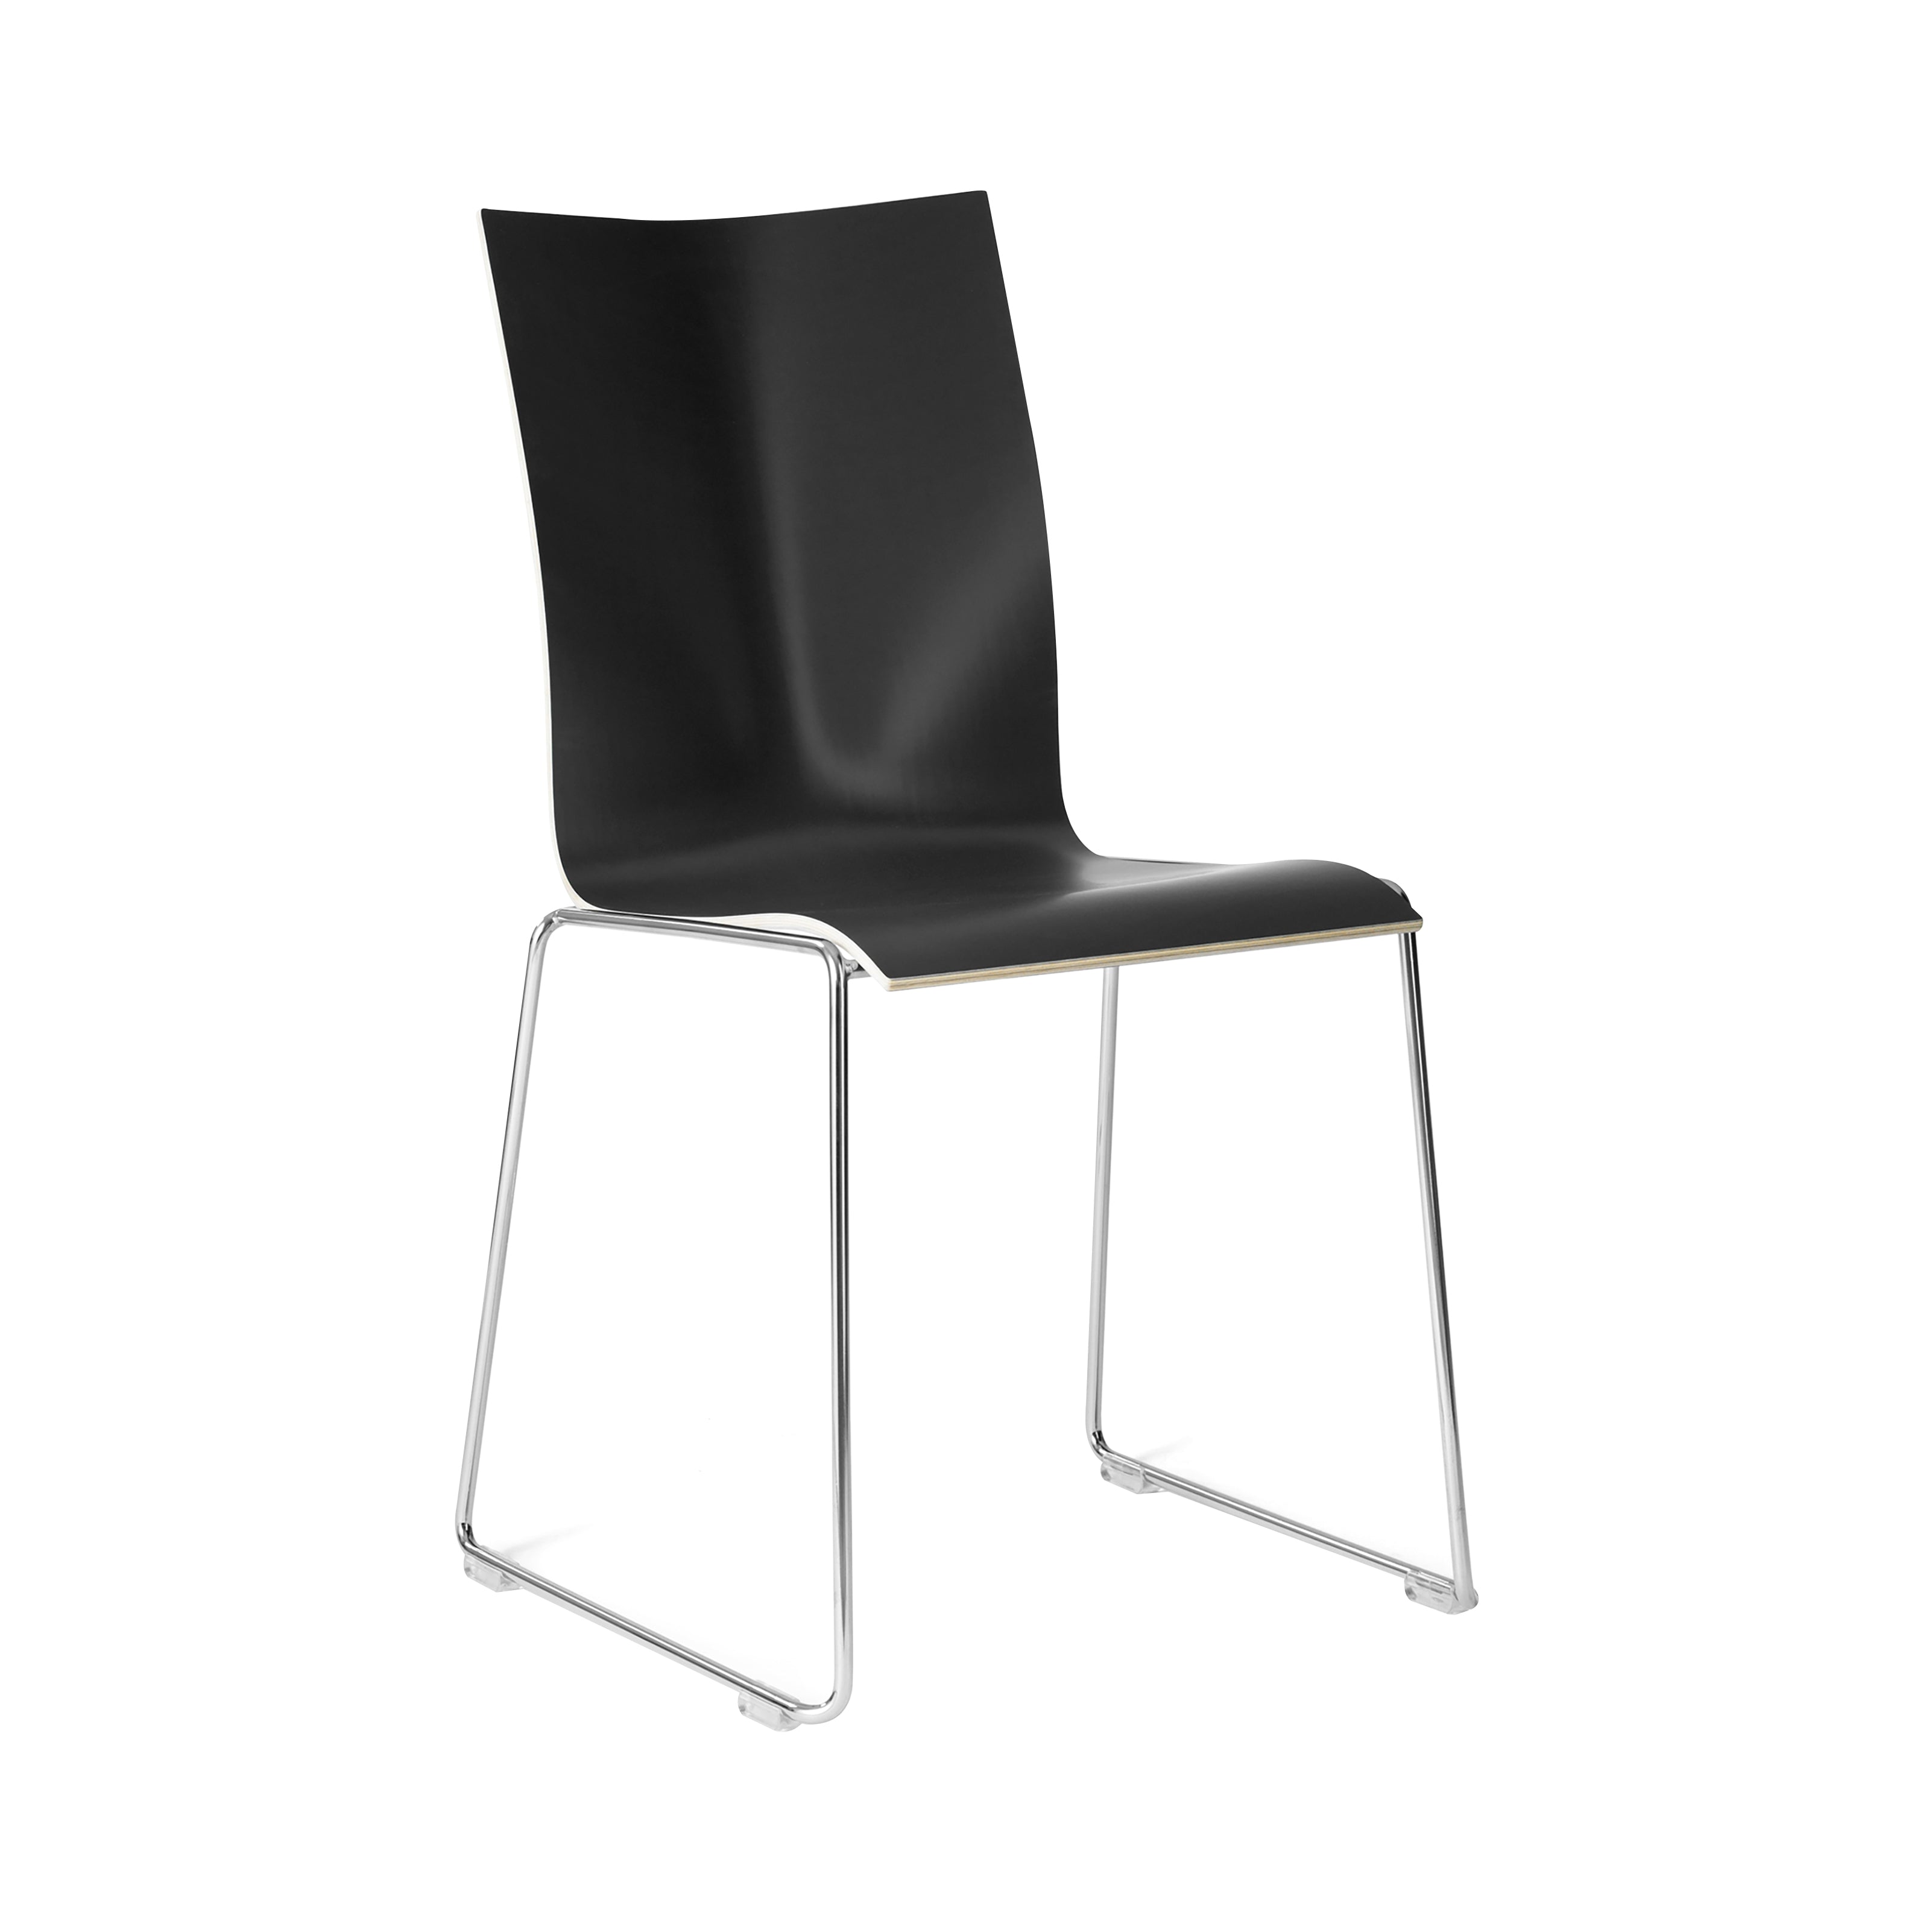 Chairik High 108 Chair: Melamine + Black + Polished Chrome